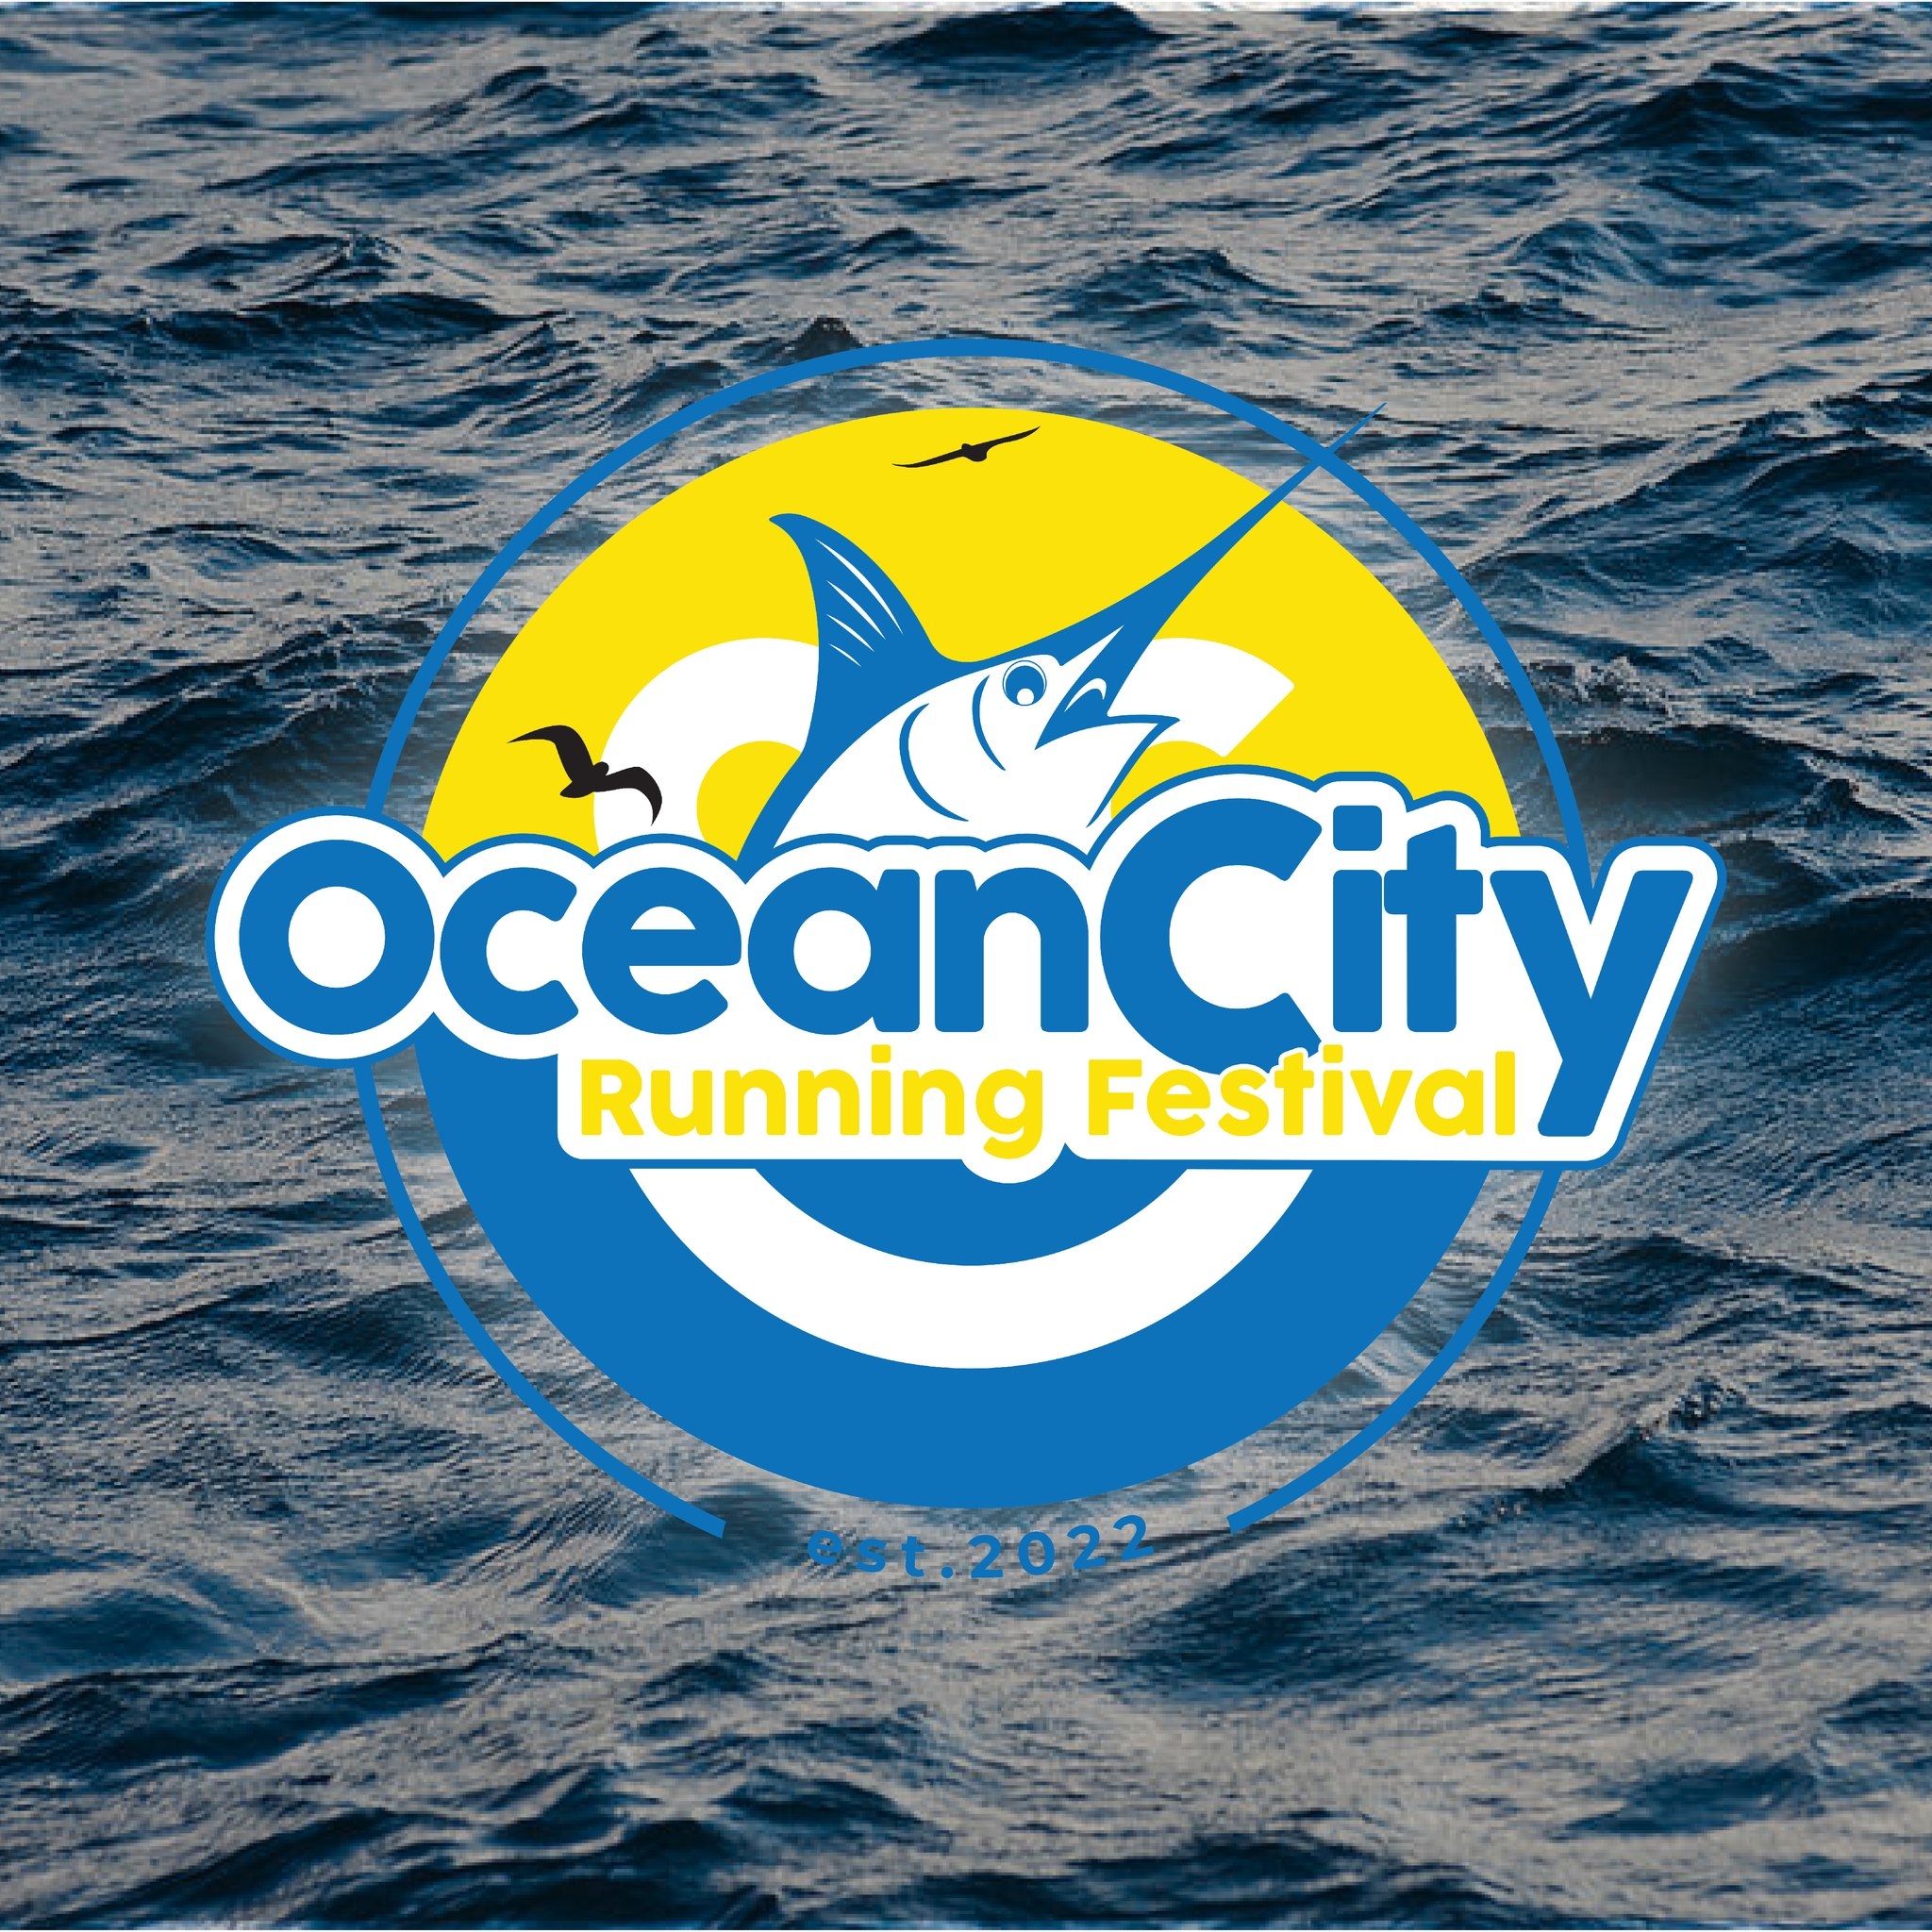 CORRIGAN SPORTS ENTERPRISES ANNOUNCES THE OCEAN CITY (MD) RUNNING FESTIVAL